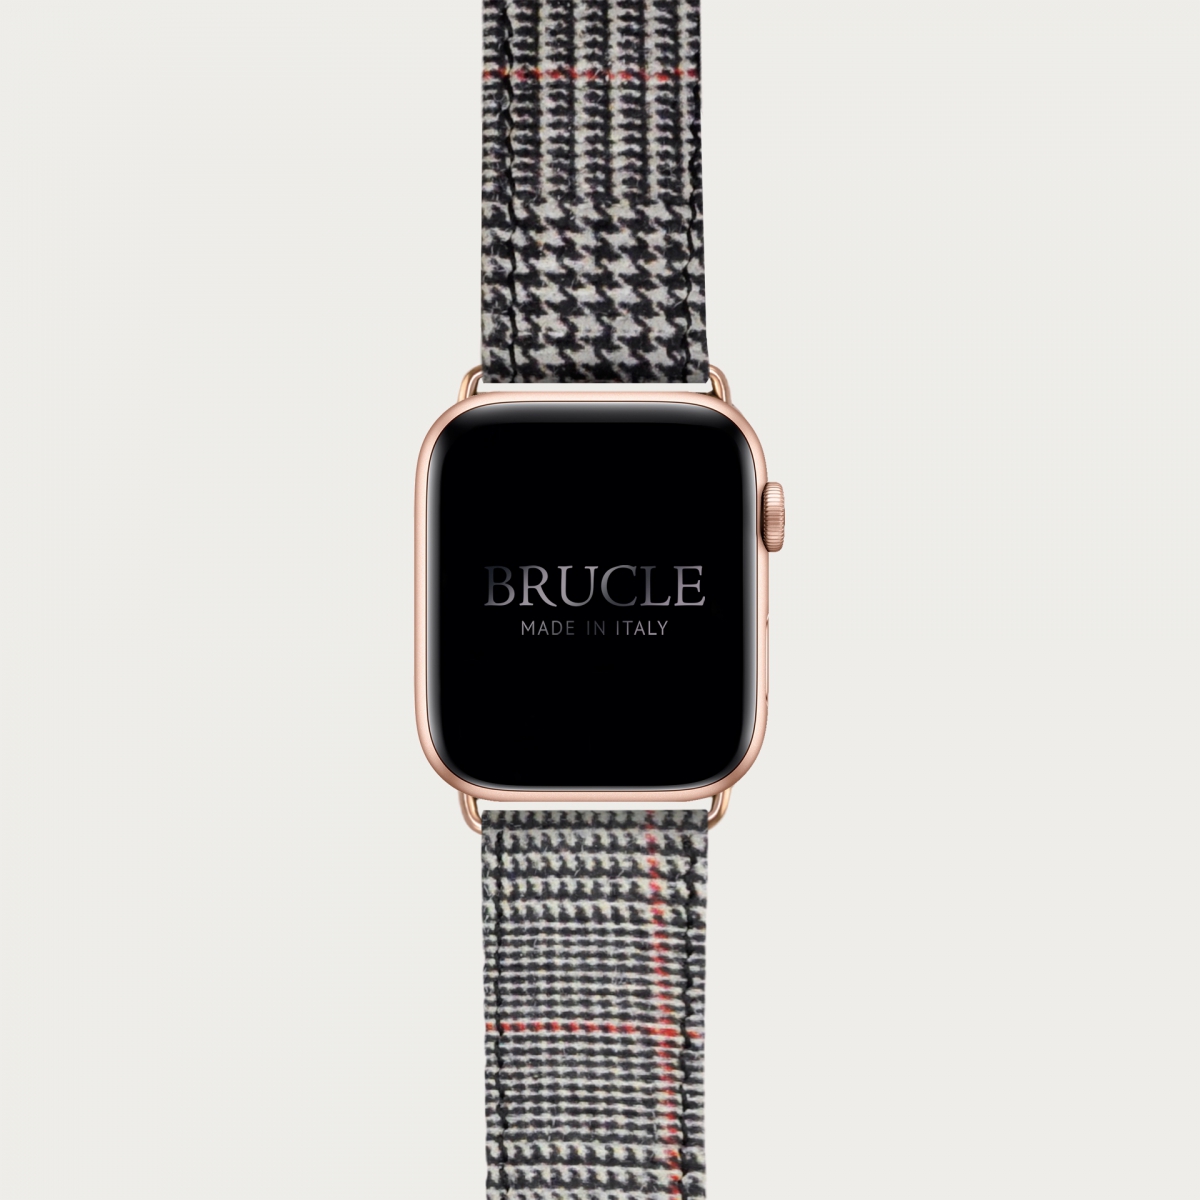 BRUCLE Armband kompatibel mit Apple Watch / Samsung Smartwatch, leder mit tartan-print